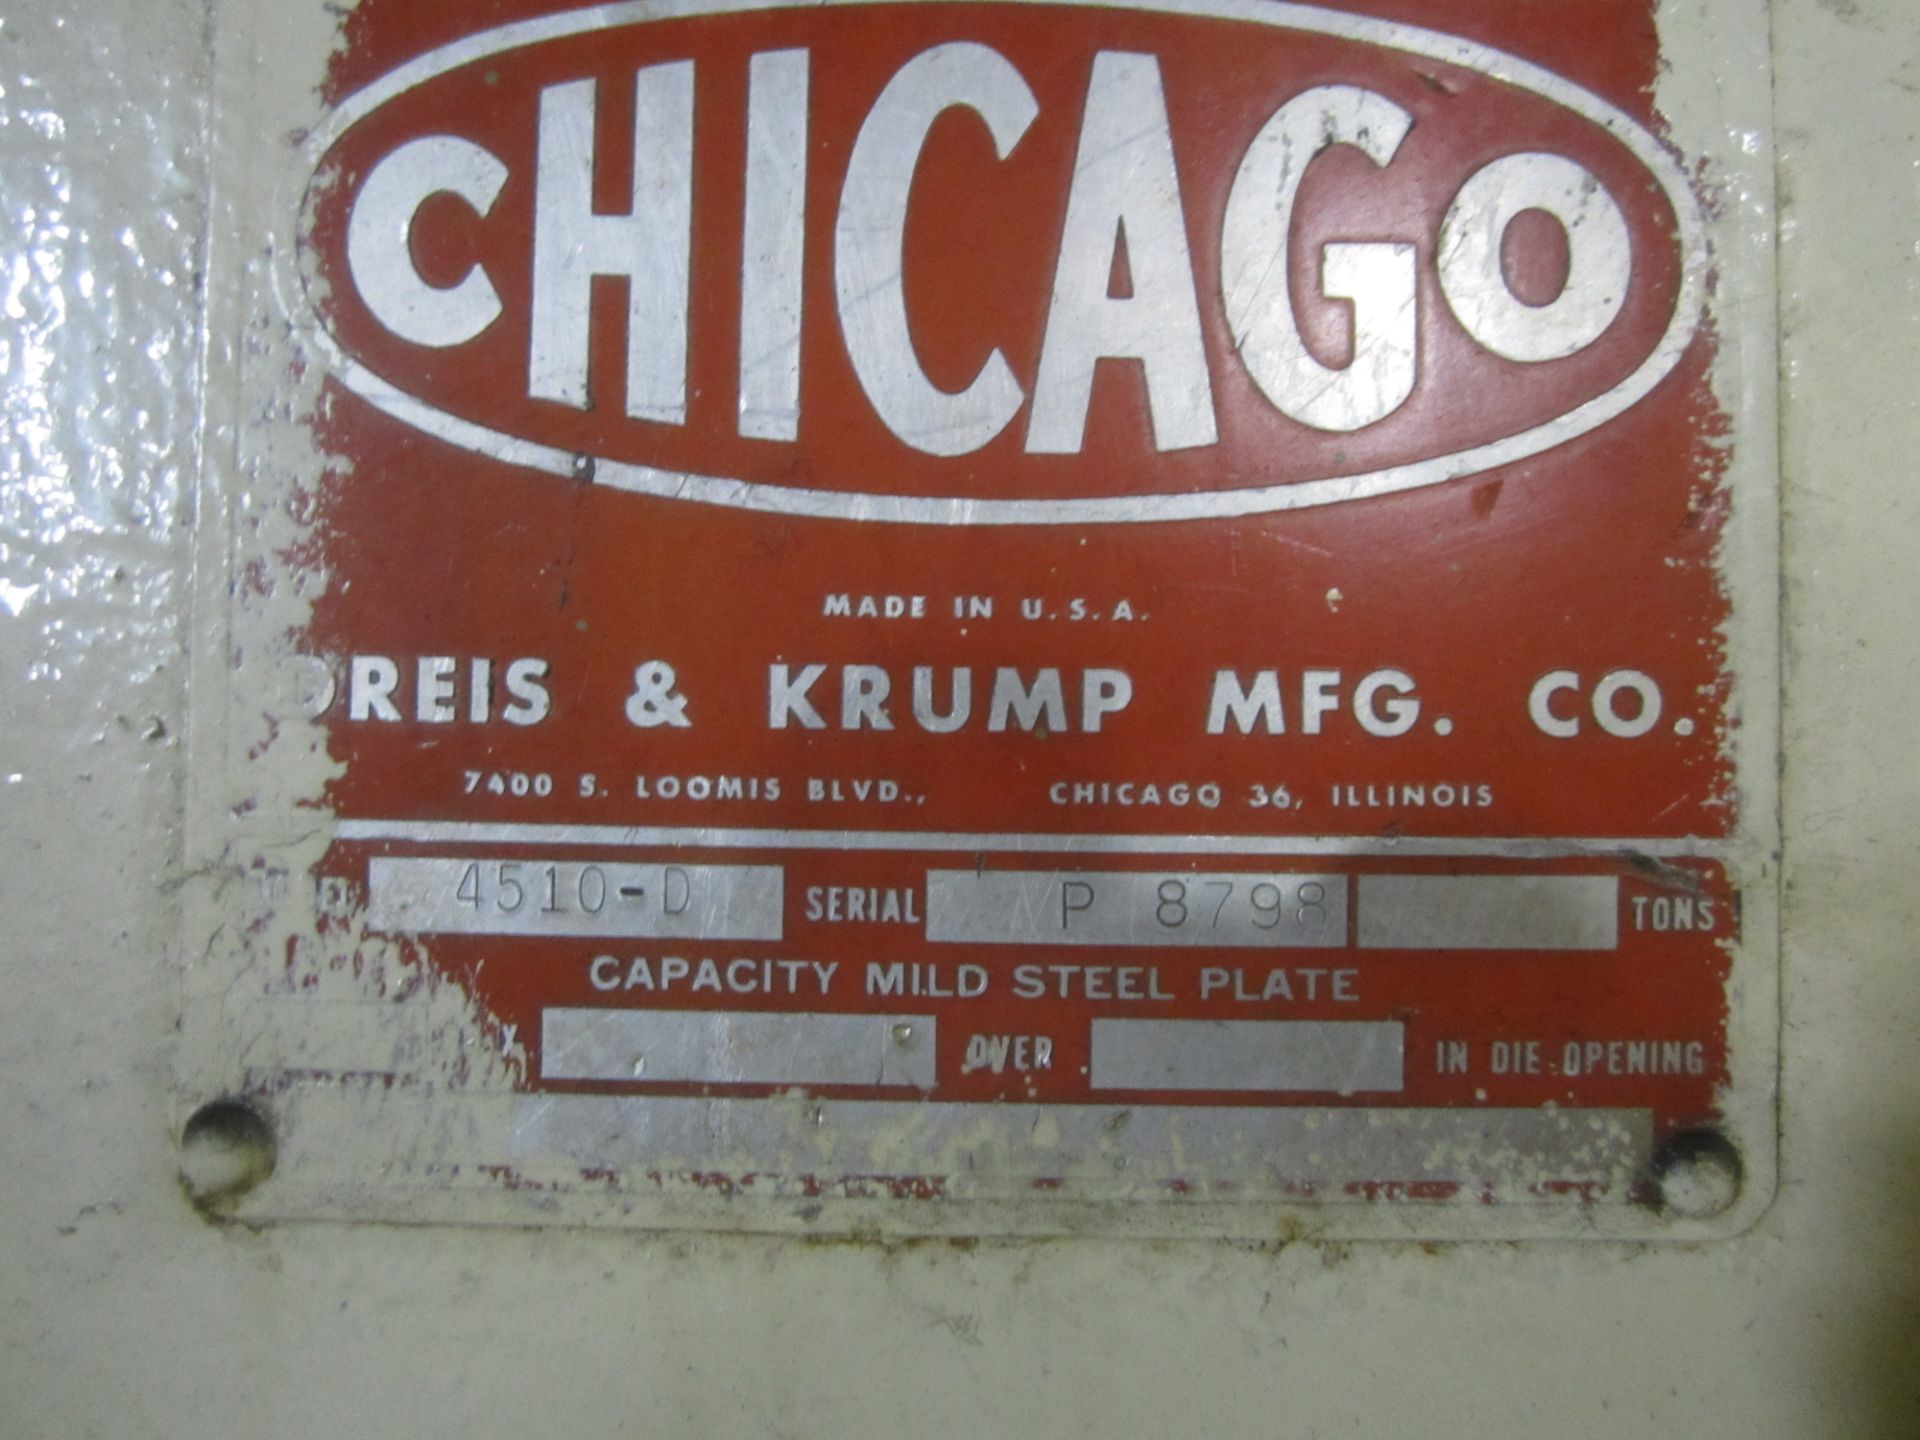 Chicago Dreis & Krump Model 4510-D Mechanical Press Brake, s/n P-8798, 125 Ton, 12’ Overall, 10’6” - Image 8 of 8